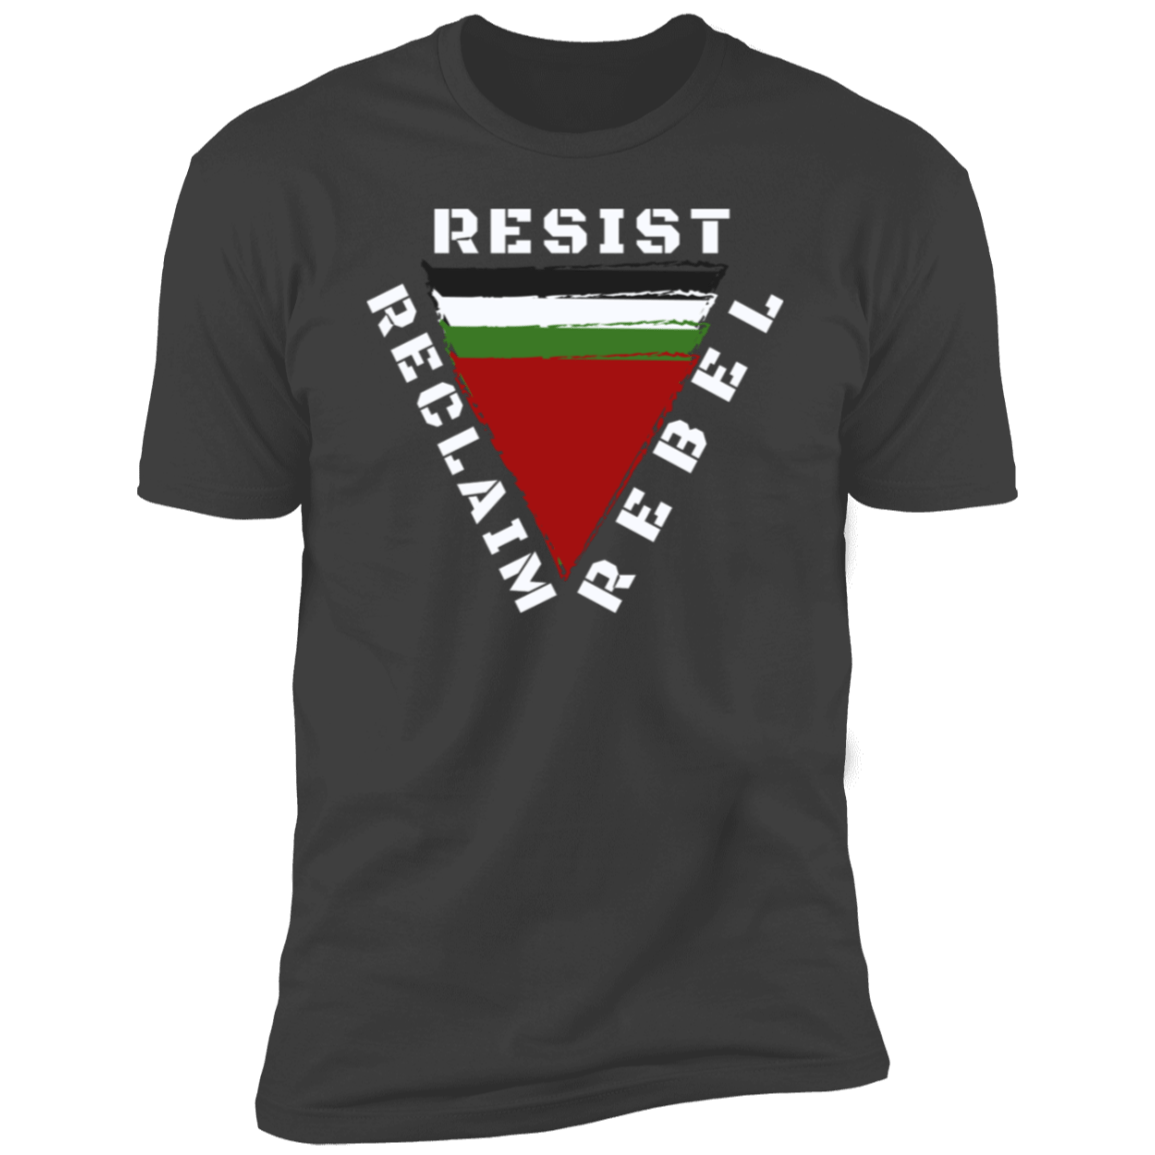 Resist Reclaim Rebel Red Triangle Tshirt